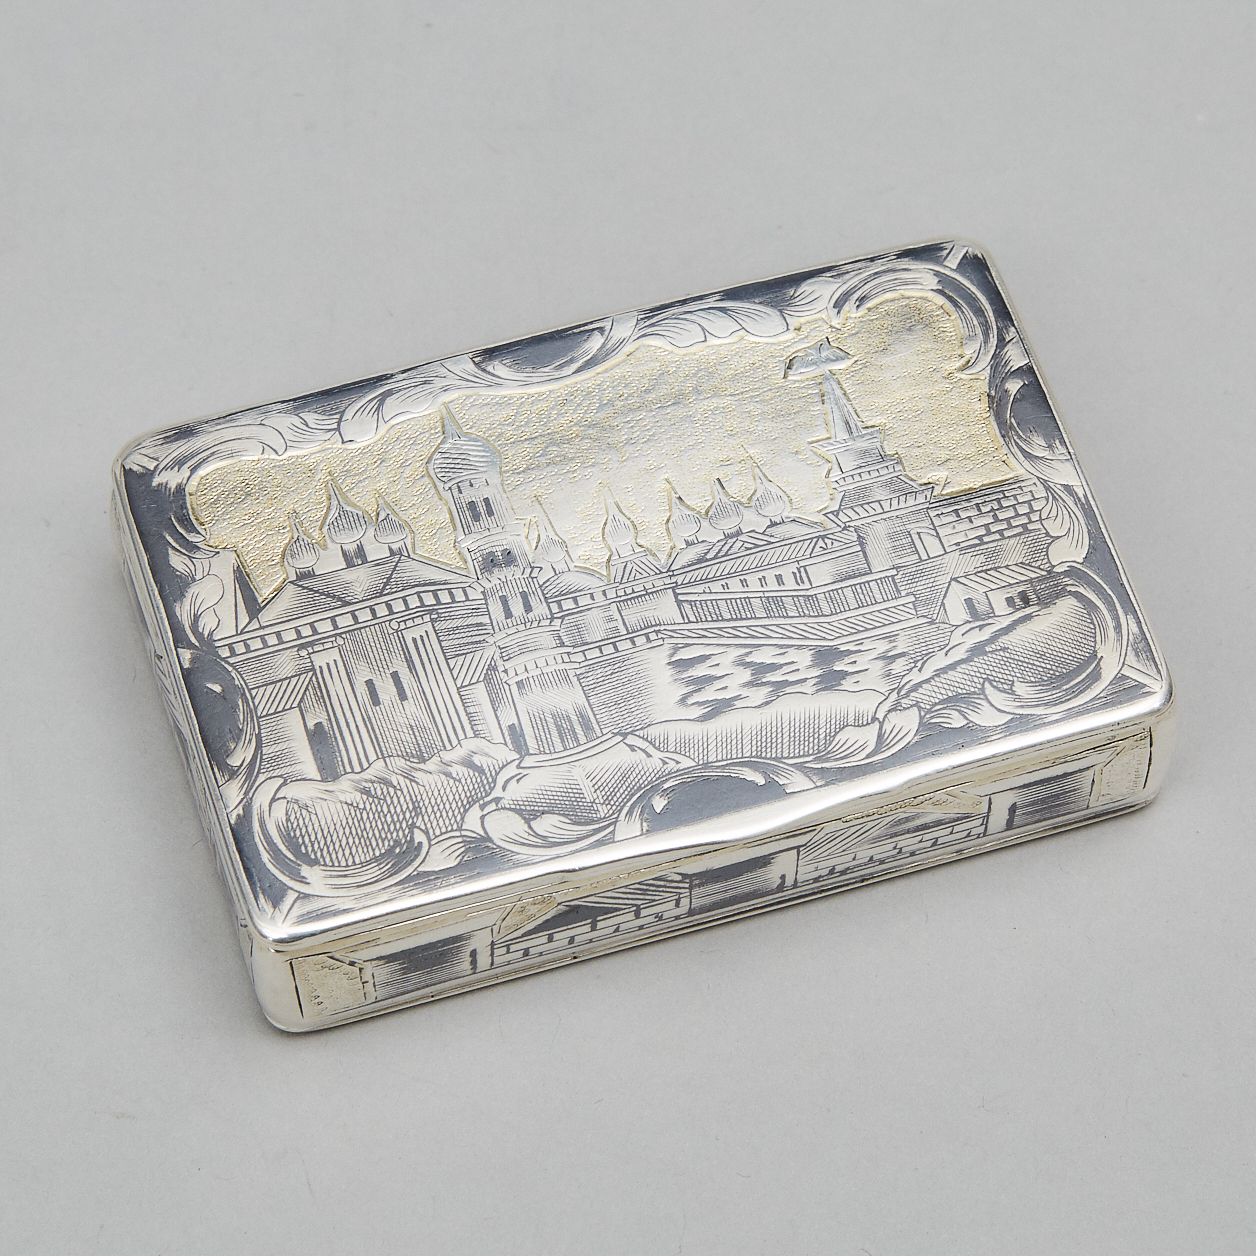 Russian Engraved and Nielloed Silver Rectangular Snuff Box, Ivan Kaltikov, Moscow, 1829